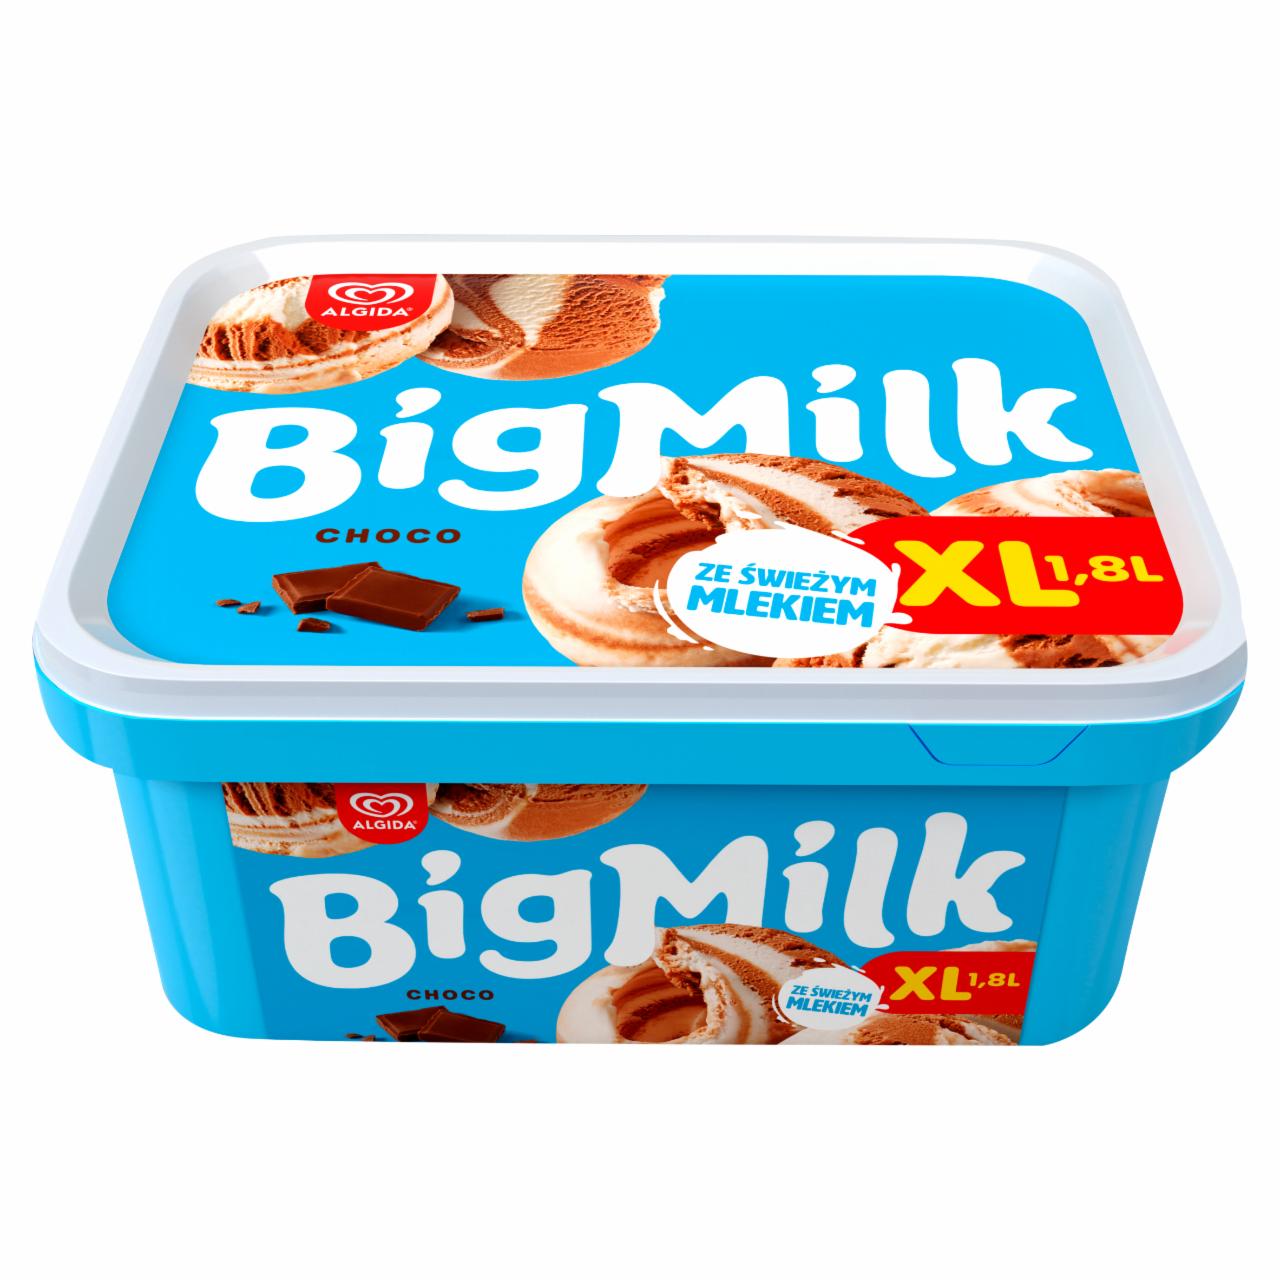 Zdjęcia - Big Milk Choco XL Lody 1,8 l